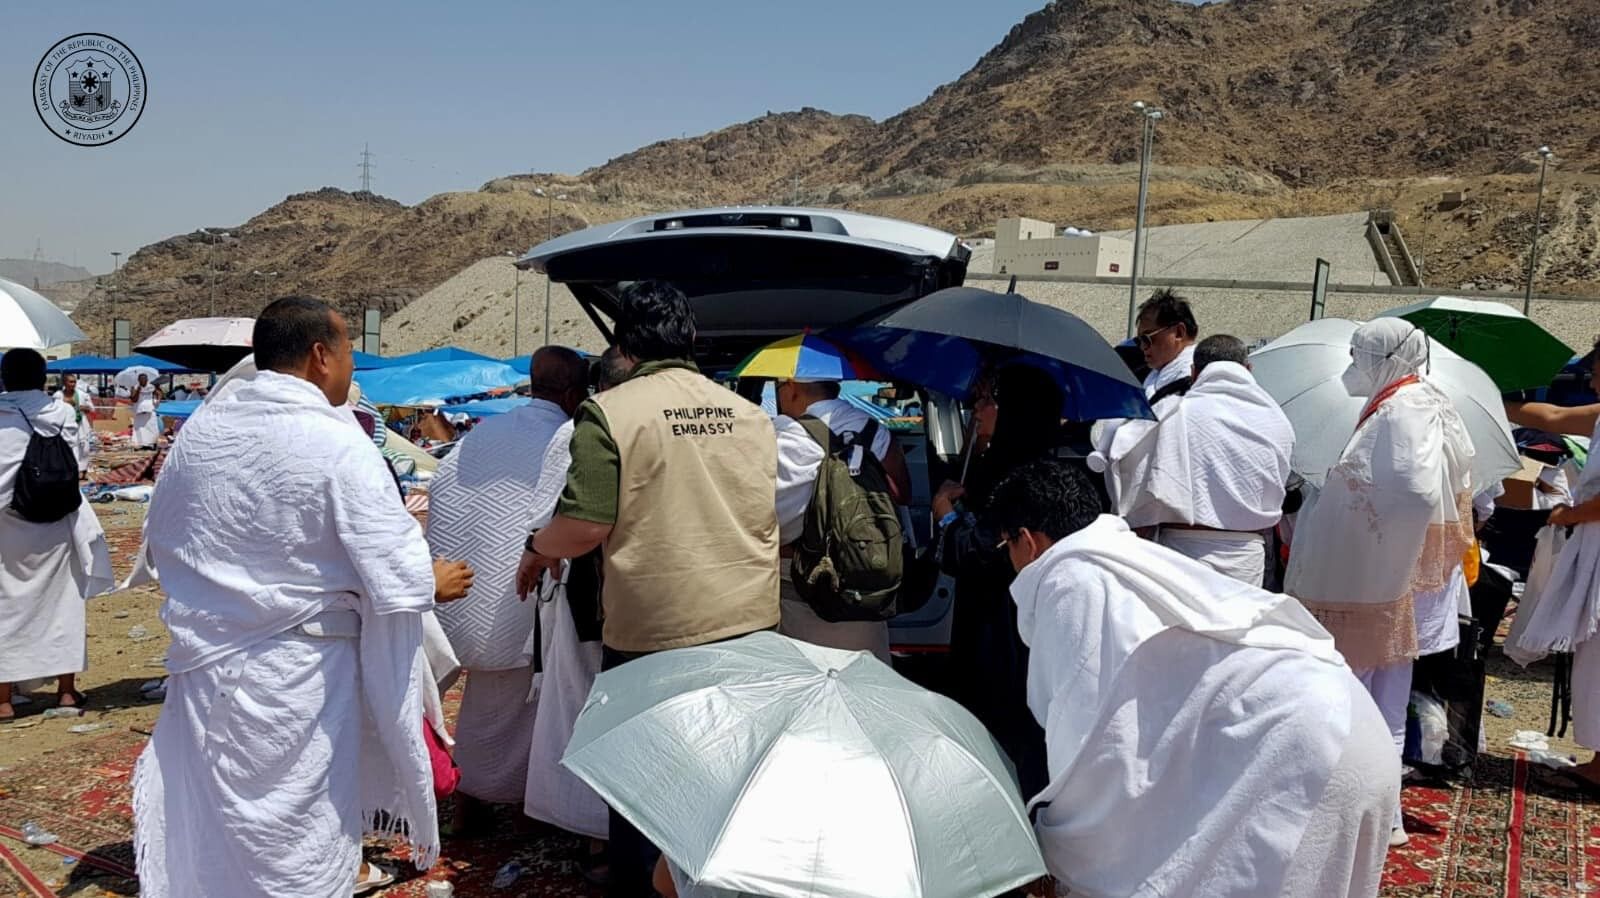 More than 200 Filipinos stranded during Hajj in Saudi Arabia now safe â�� PH Embassy